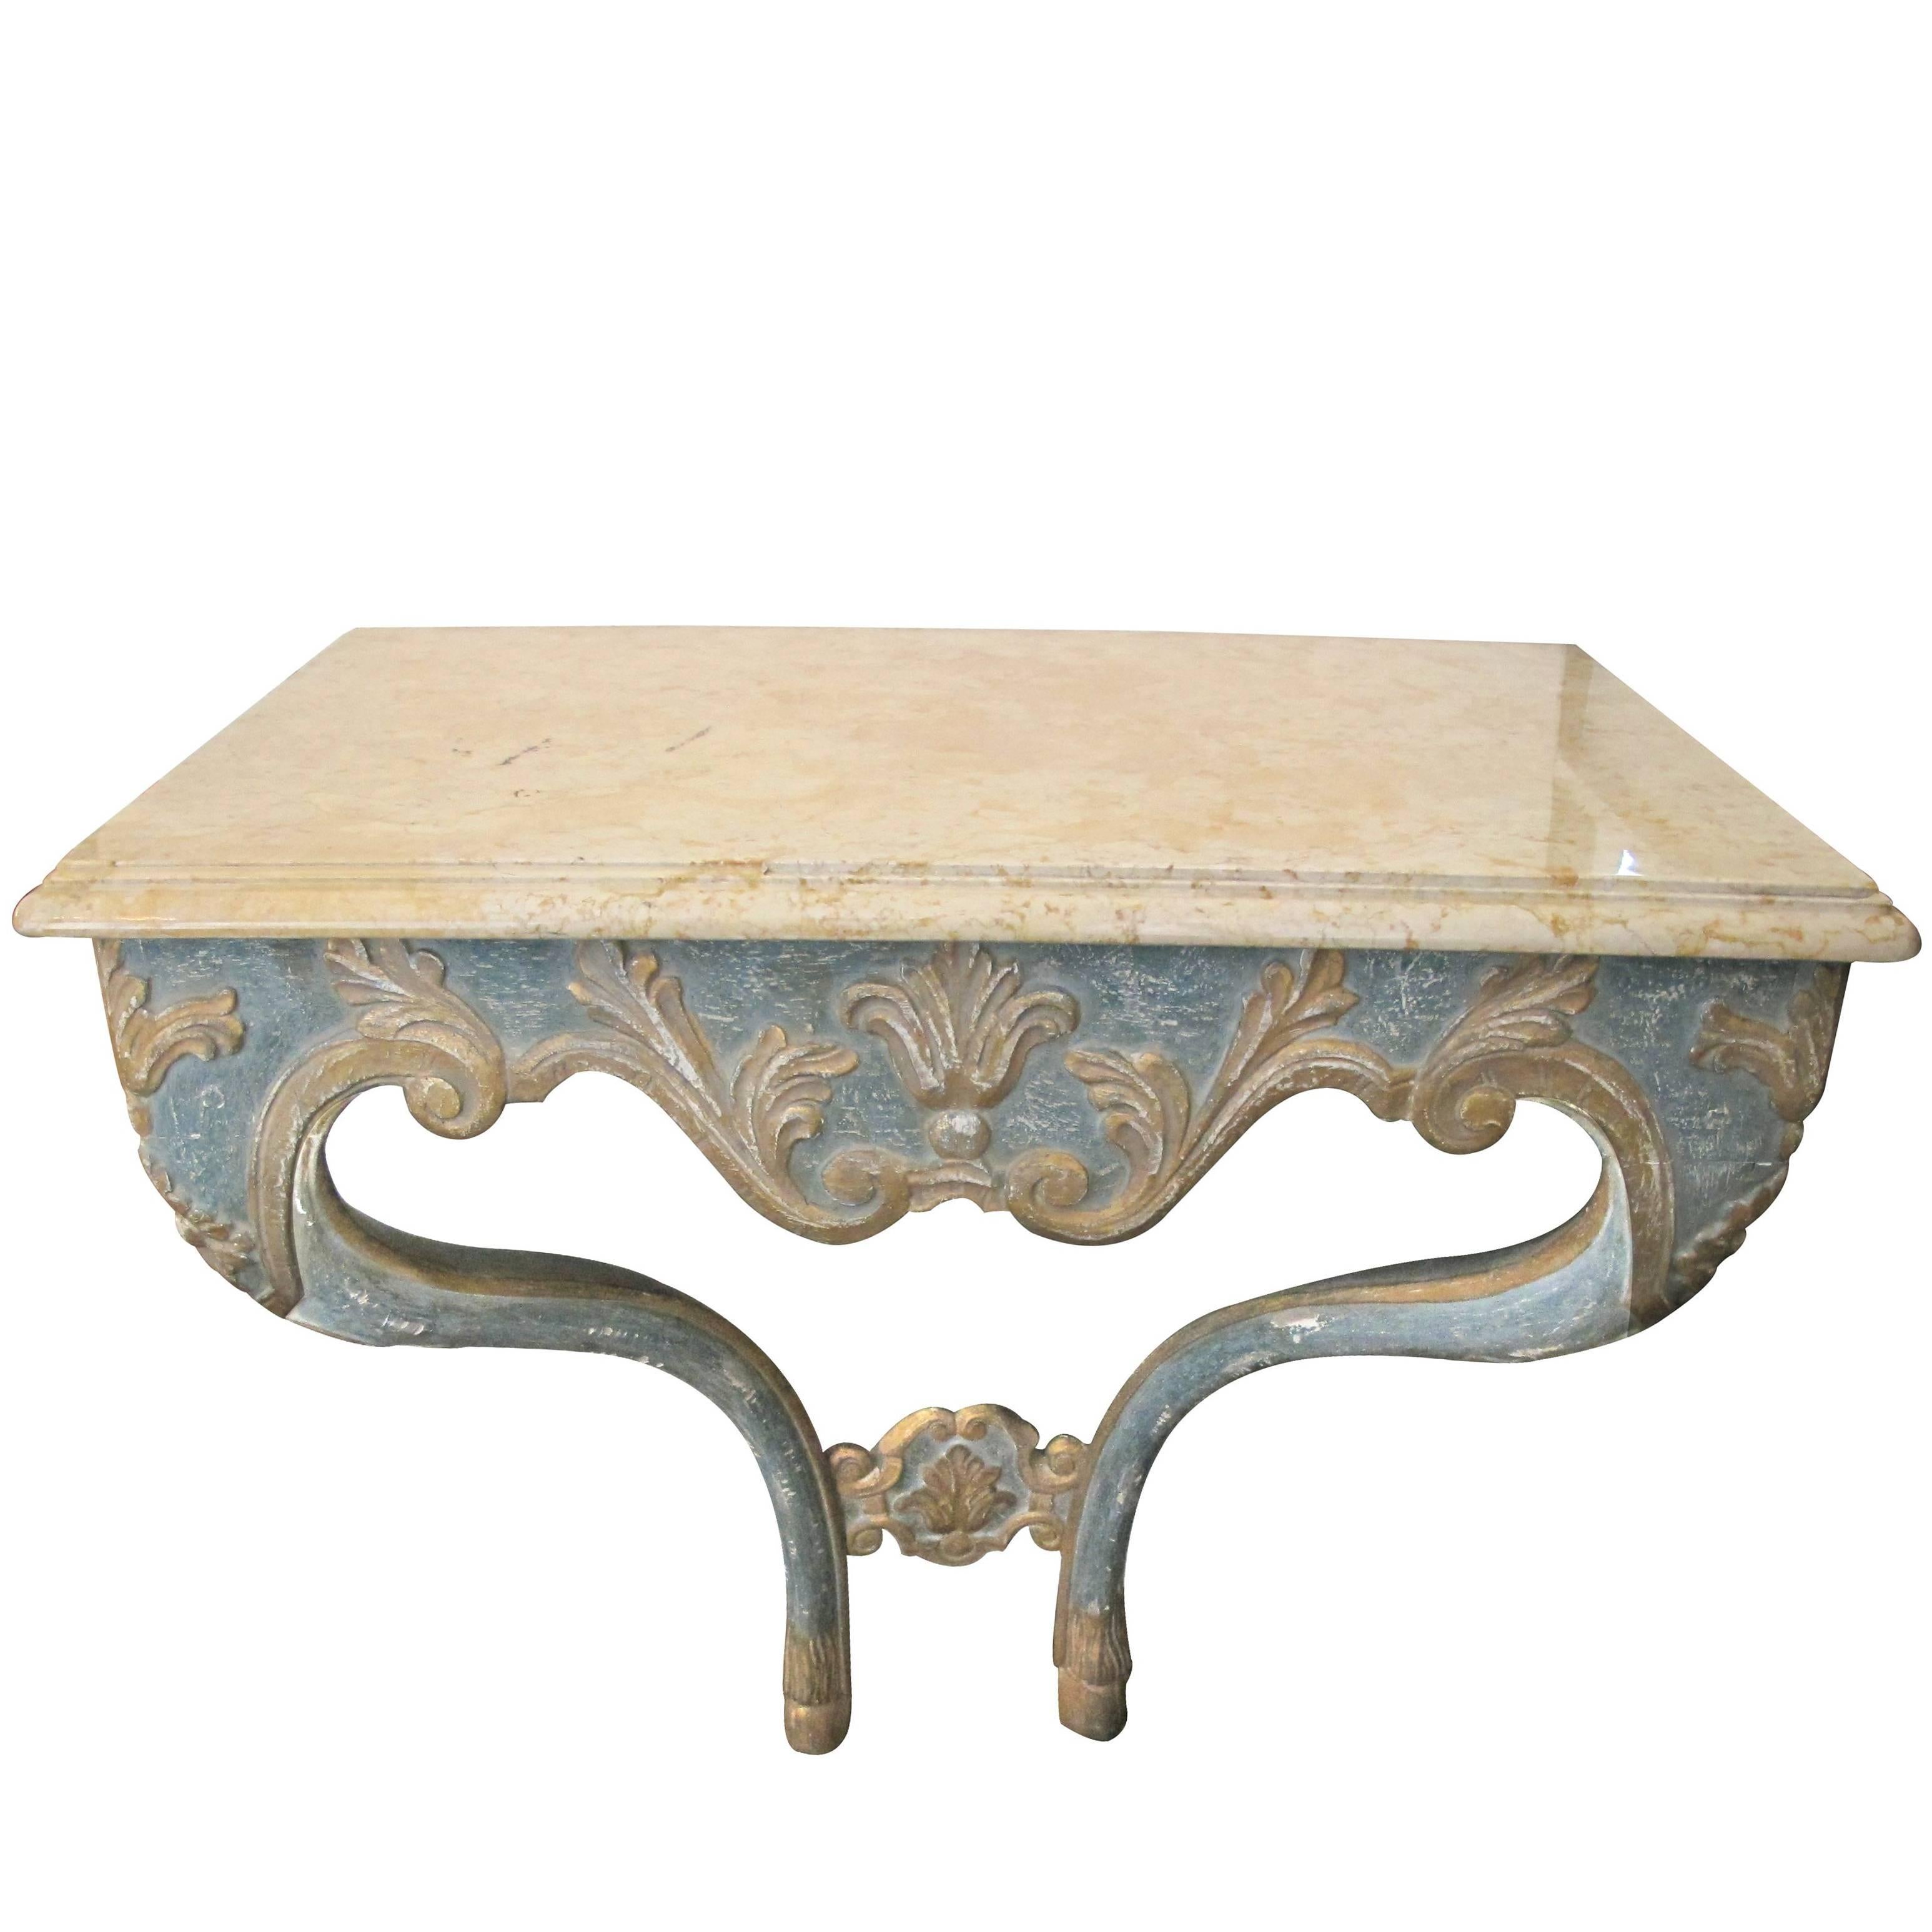 Elegant Custom-Made Italian Baroque Style Aqua and Ochre Painted Console Table